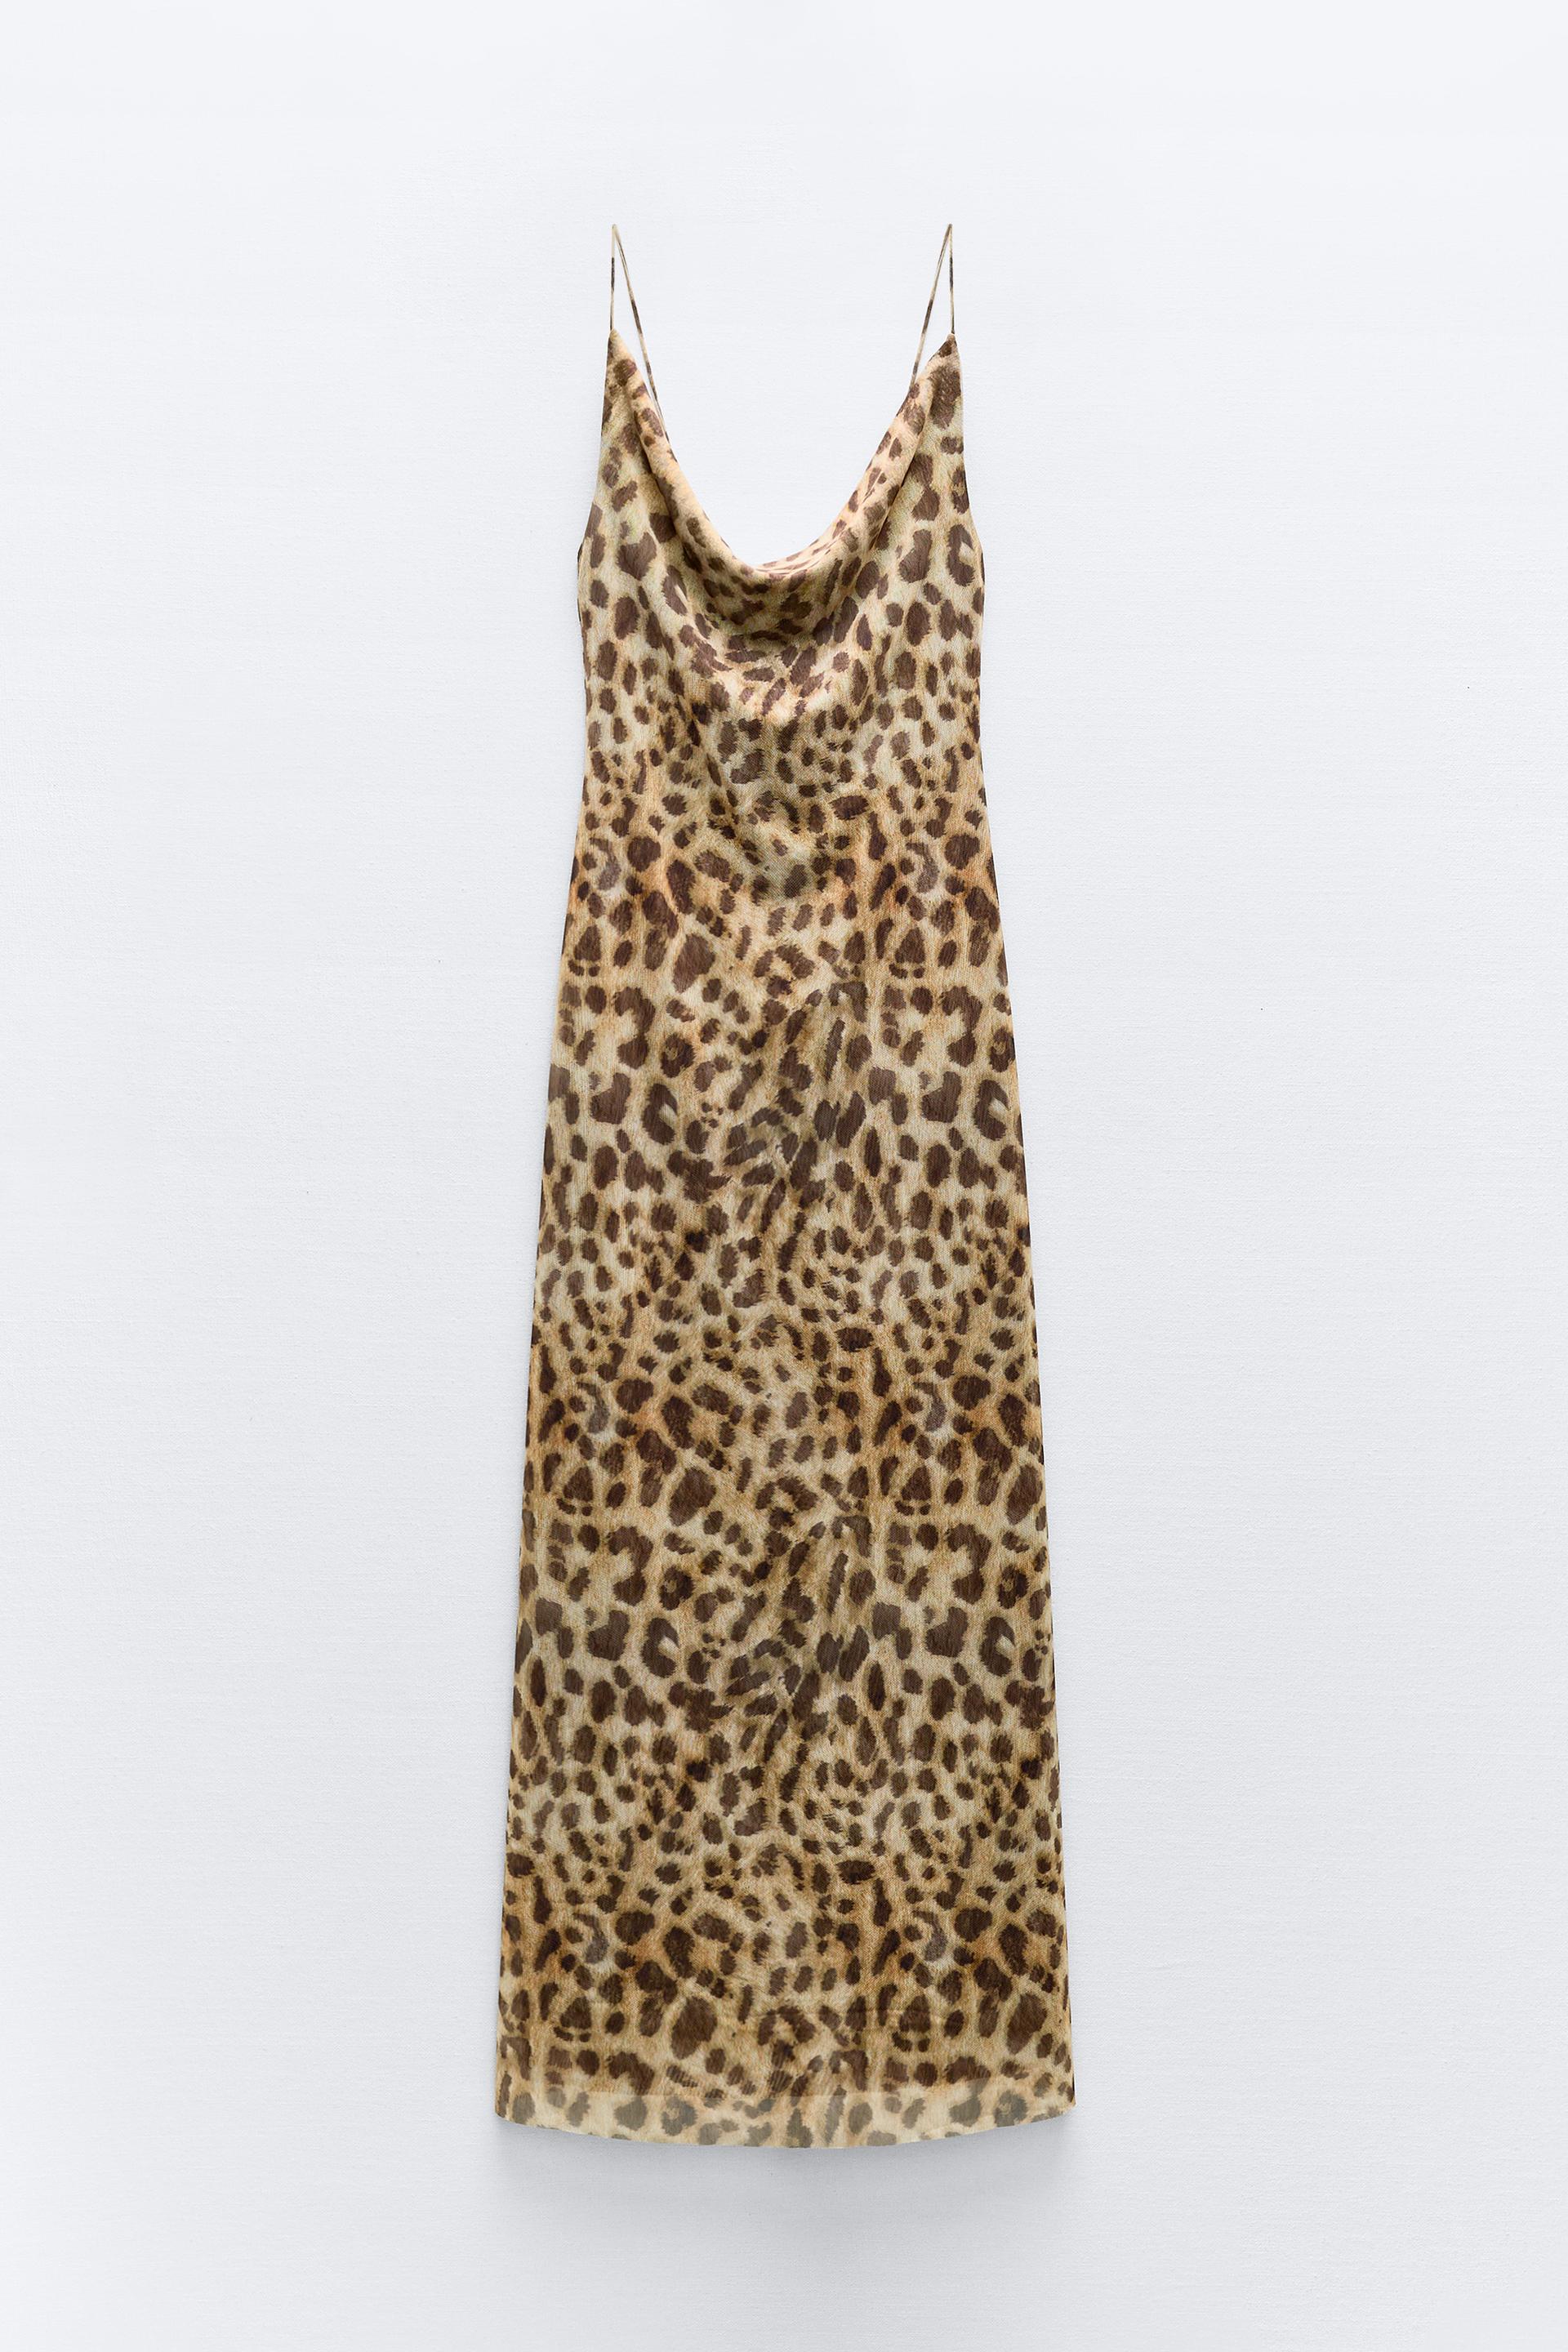 ANIMAL PRINT TULLE DRESS - Leopard